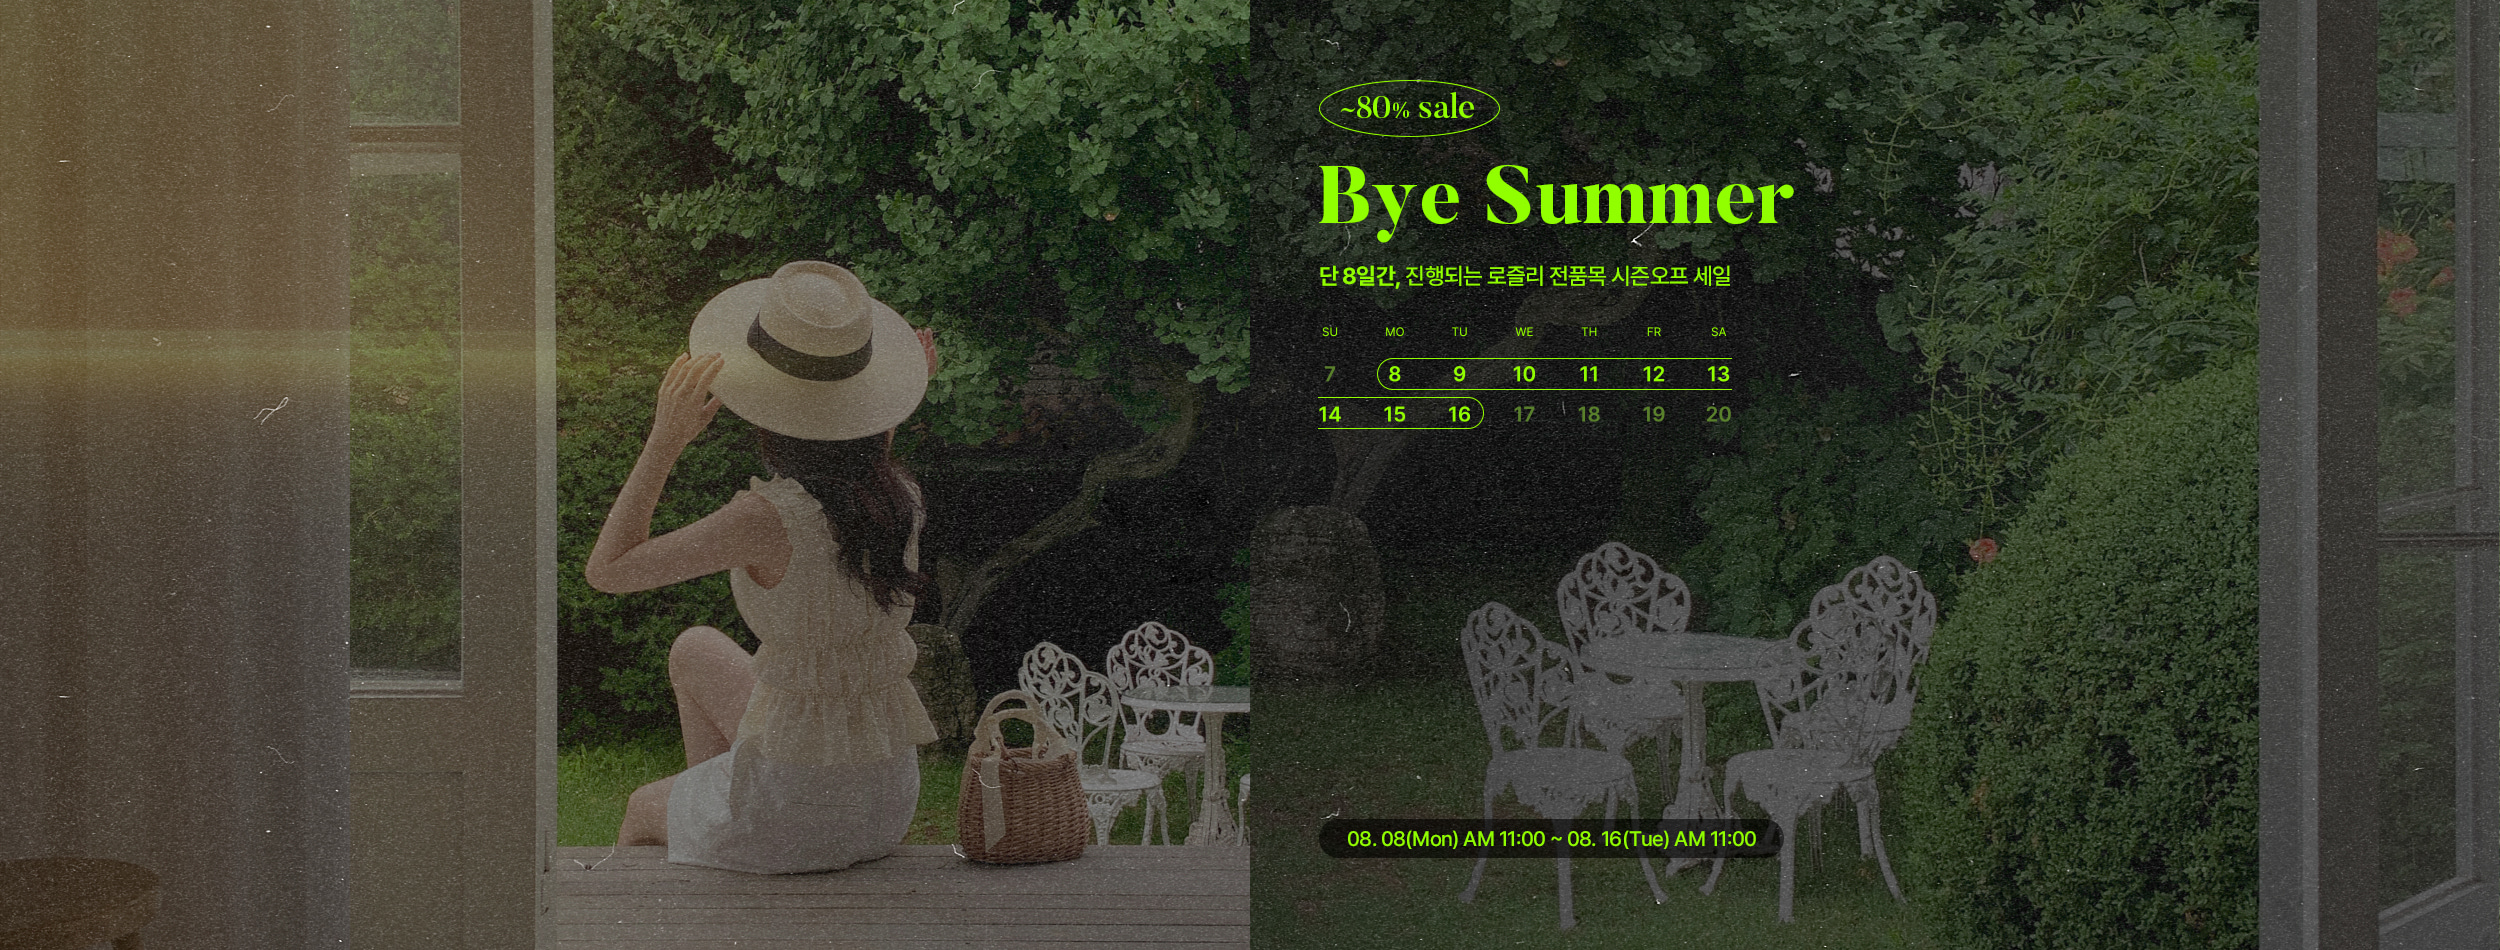 Bye Summer_main